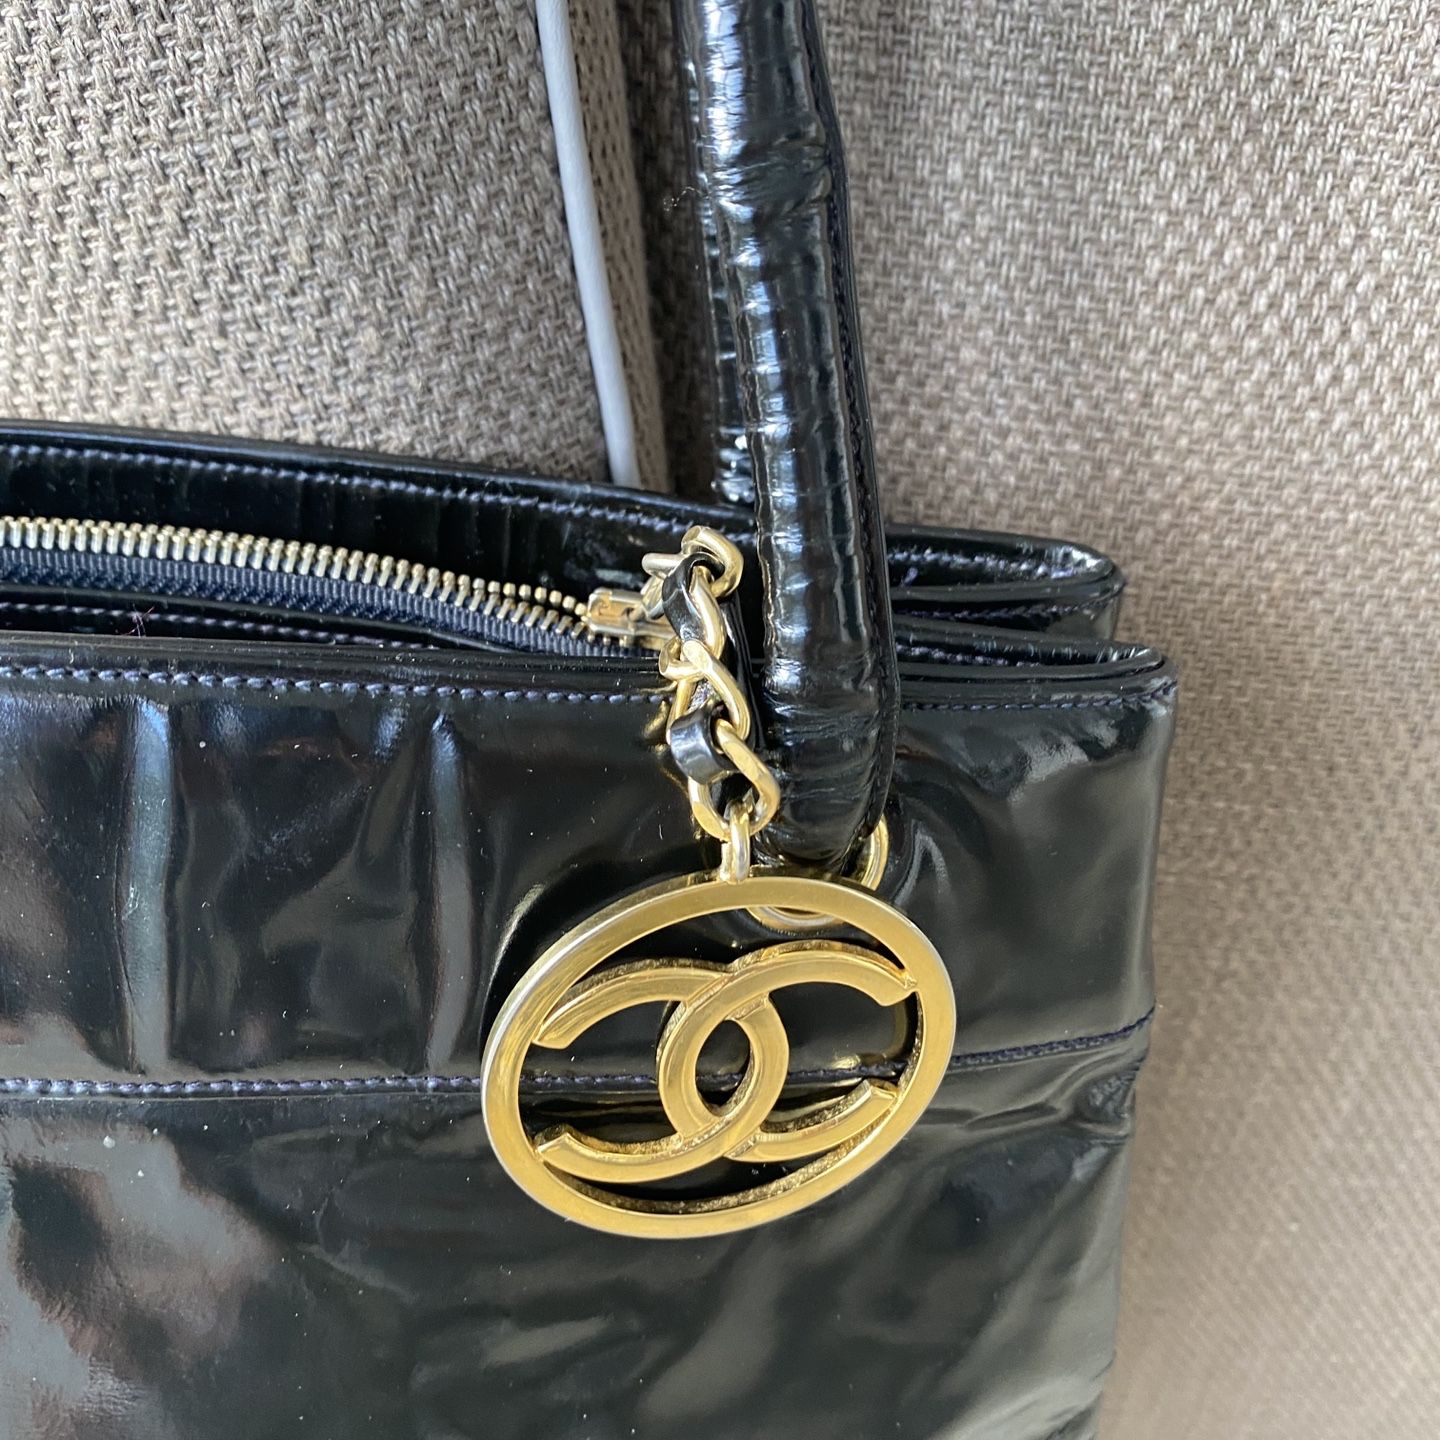 Authentic Chanel Vintage Purse, Navy Patent Leather